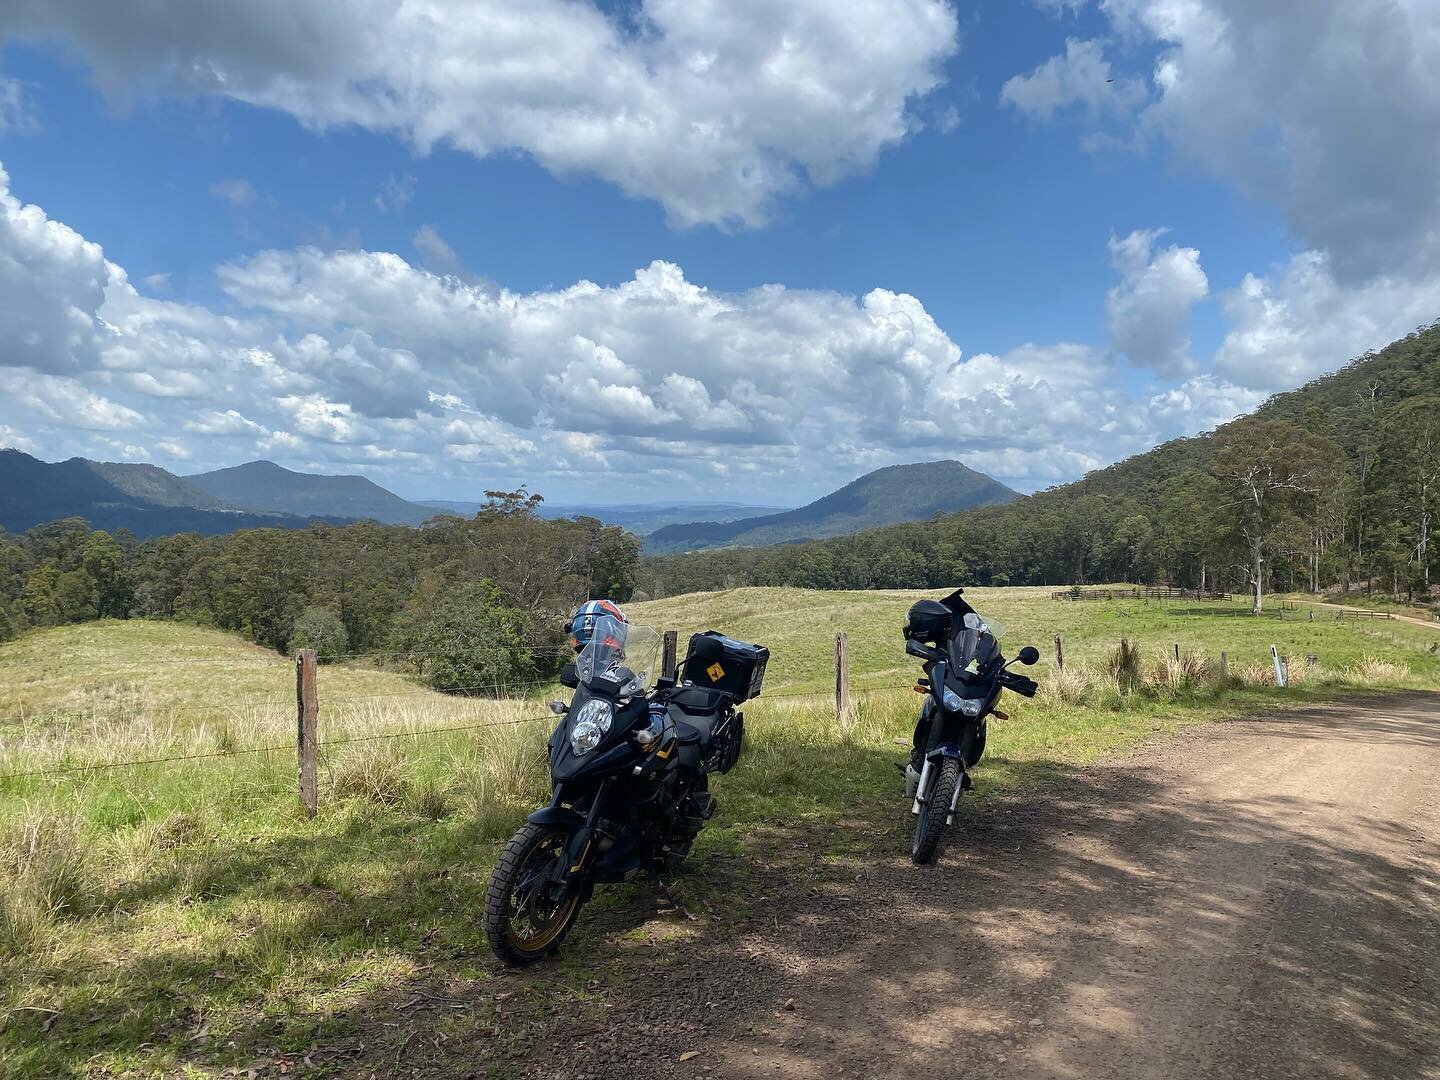 #australianbackroadsmotorcycletouring #vstrom1000xt #kle500kawasaki #adventuretouring #northernnsw #borderrangesnationalpark